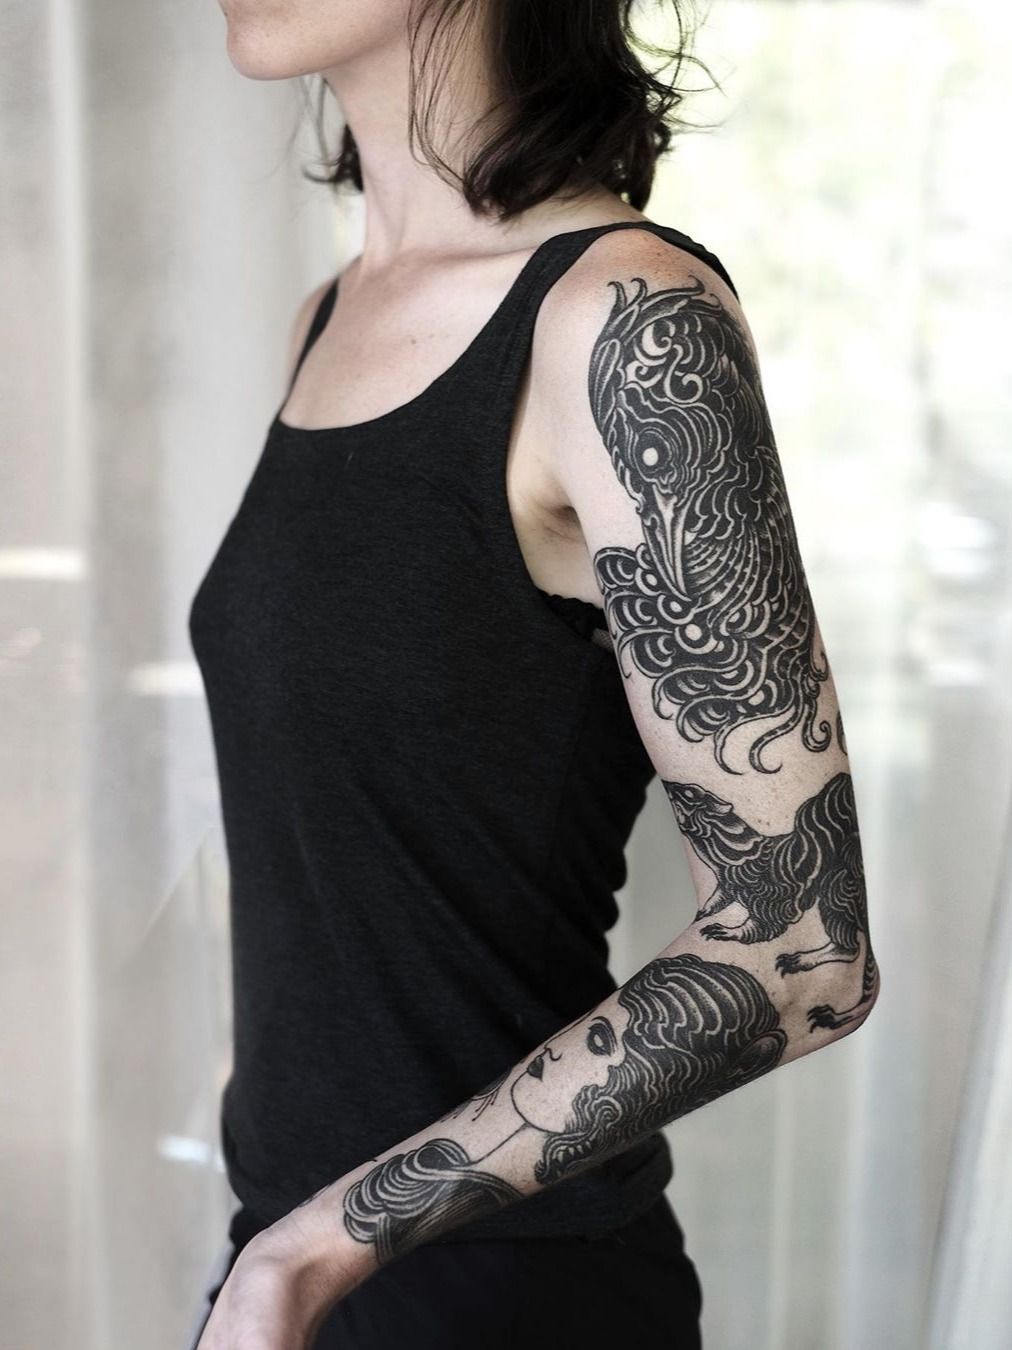 6 more tatts for her patch work sleeve tattoo tatt tattooideas  tatuagem tatuagemfeminina finelinetattoo fineline fyp foryou   Instagram post from Millena Sousa  miagstattoo